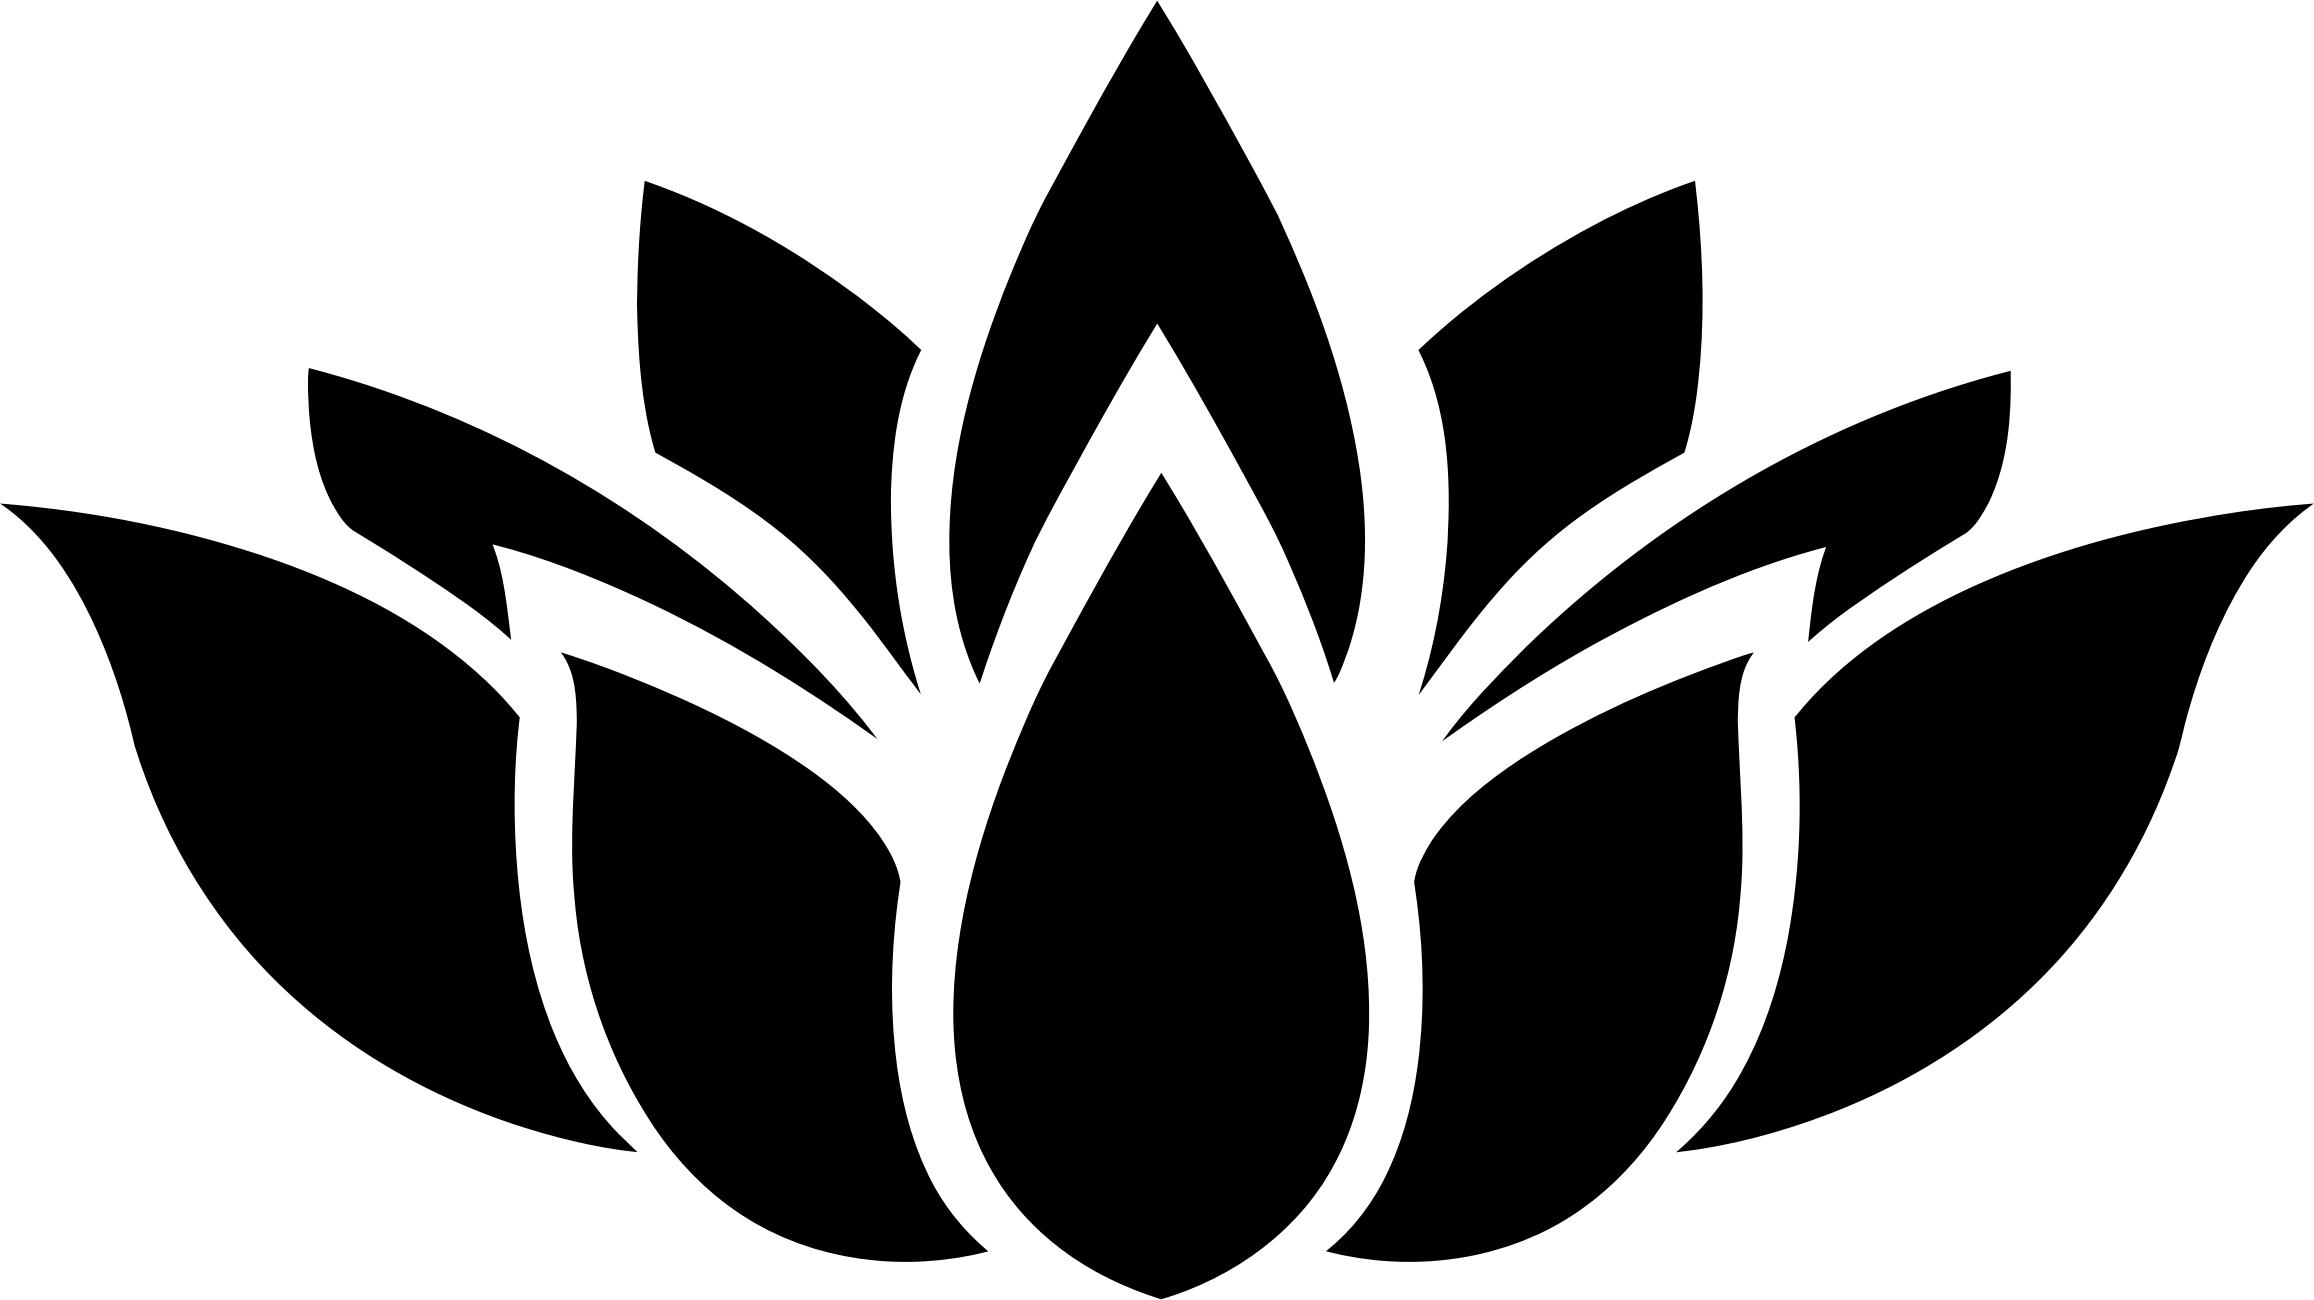 Lotus Flower Silhouette 7 png